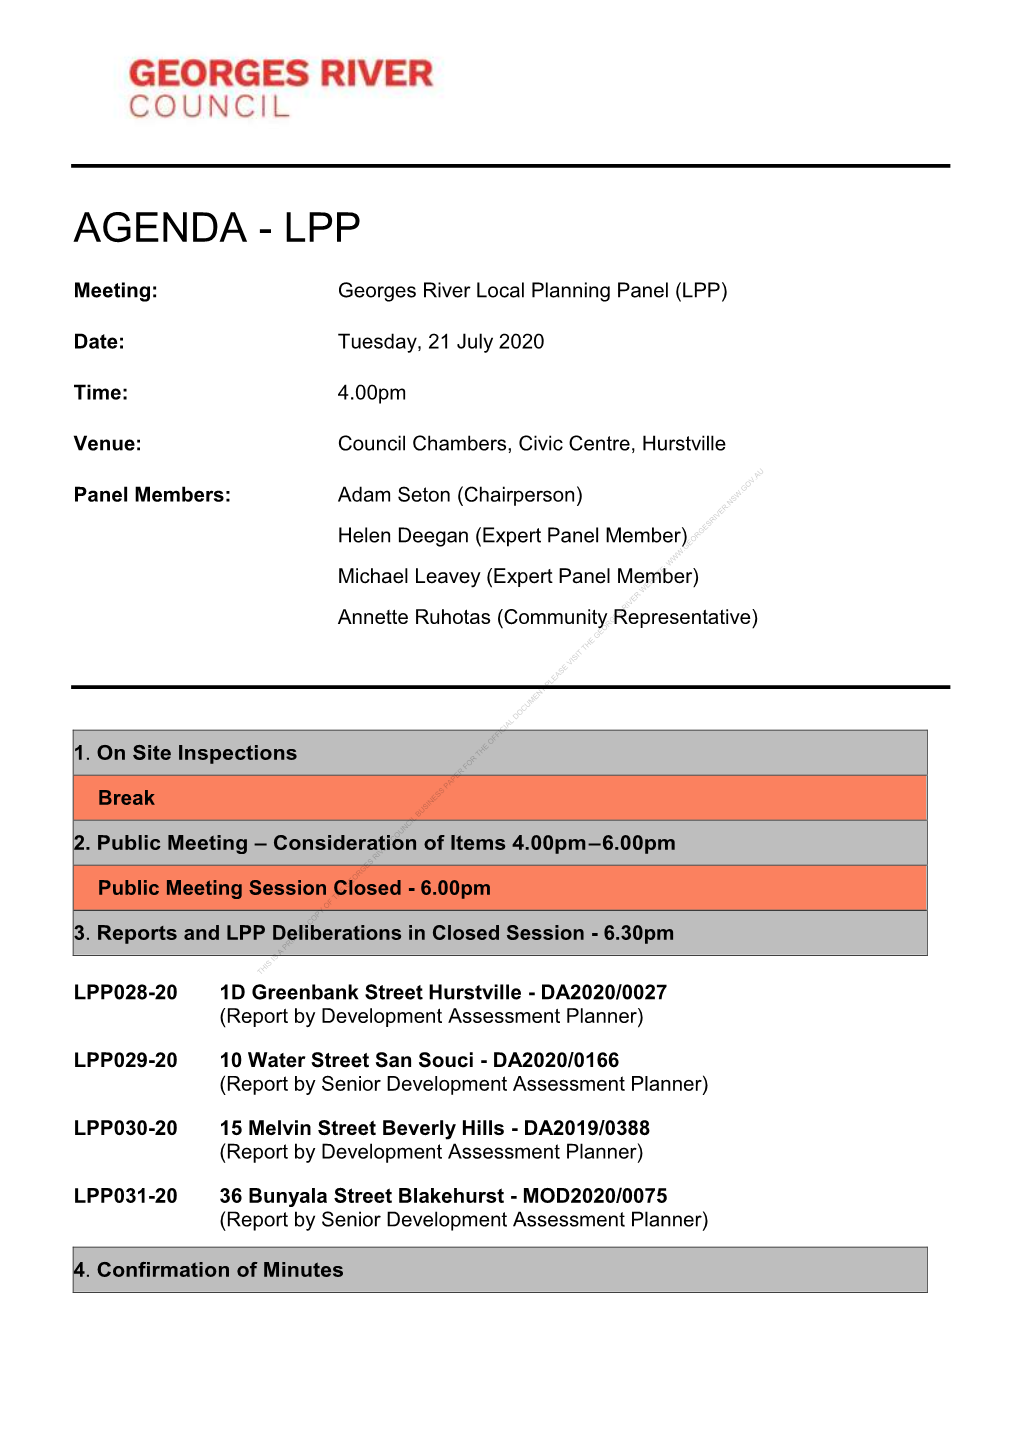 Agenda of Georges River Local Planning Panel (LPP)